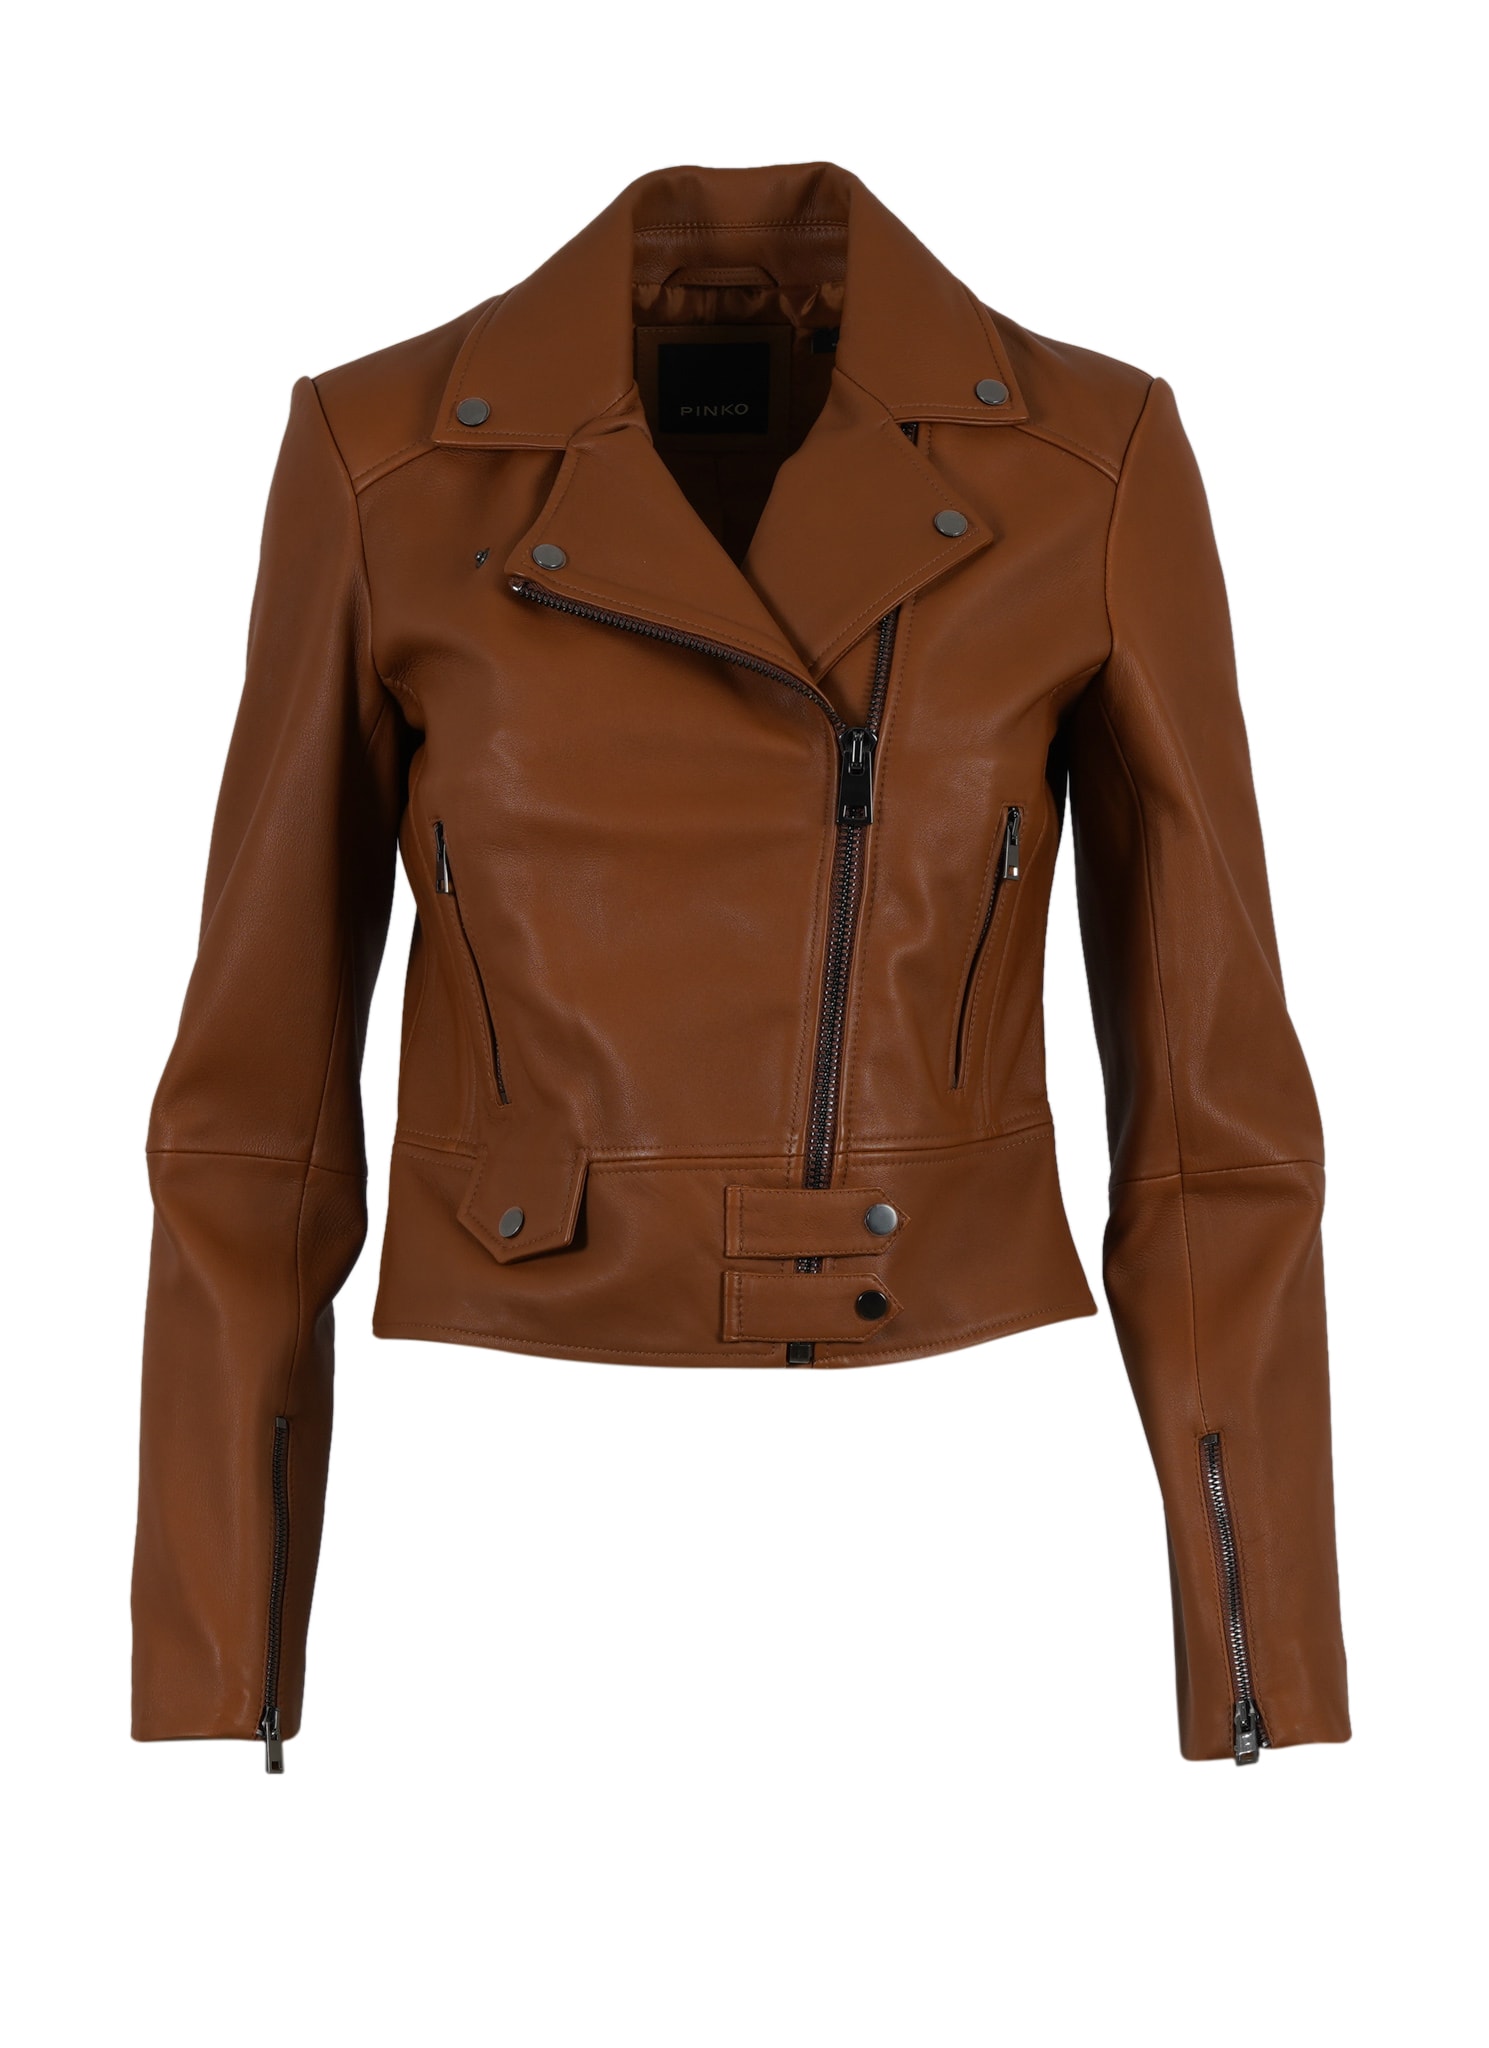 Pinko Sensibile 10 Leather Jacket